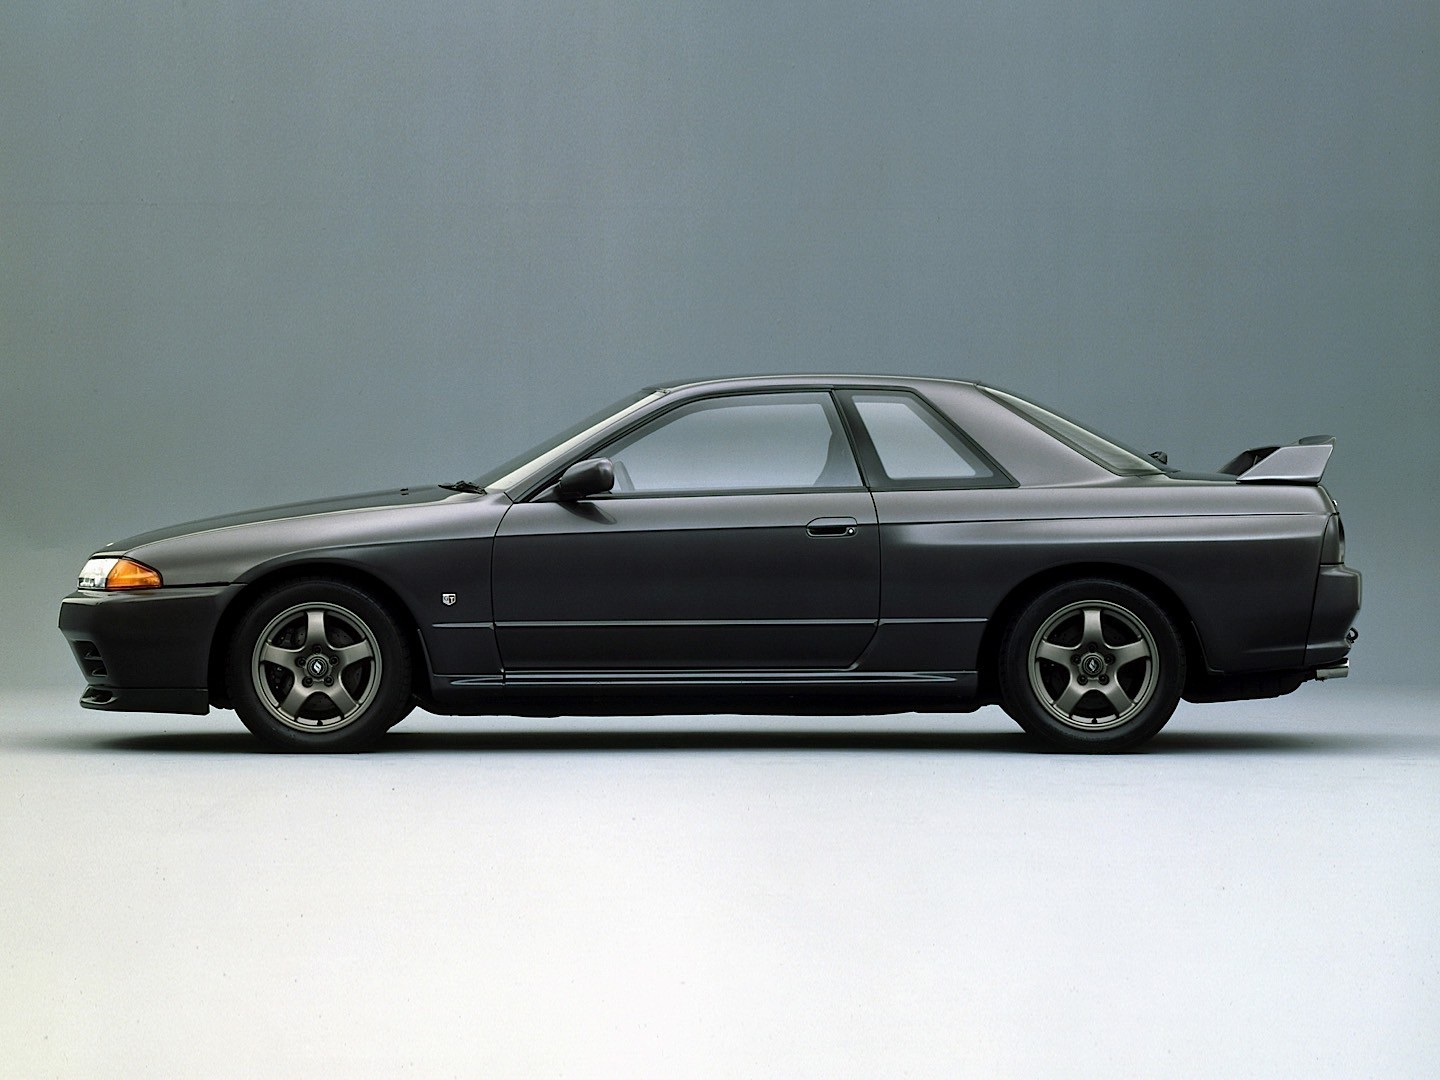 1994 Nissan skyline gtr review #8